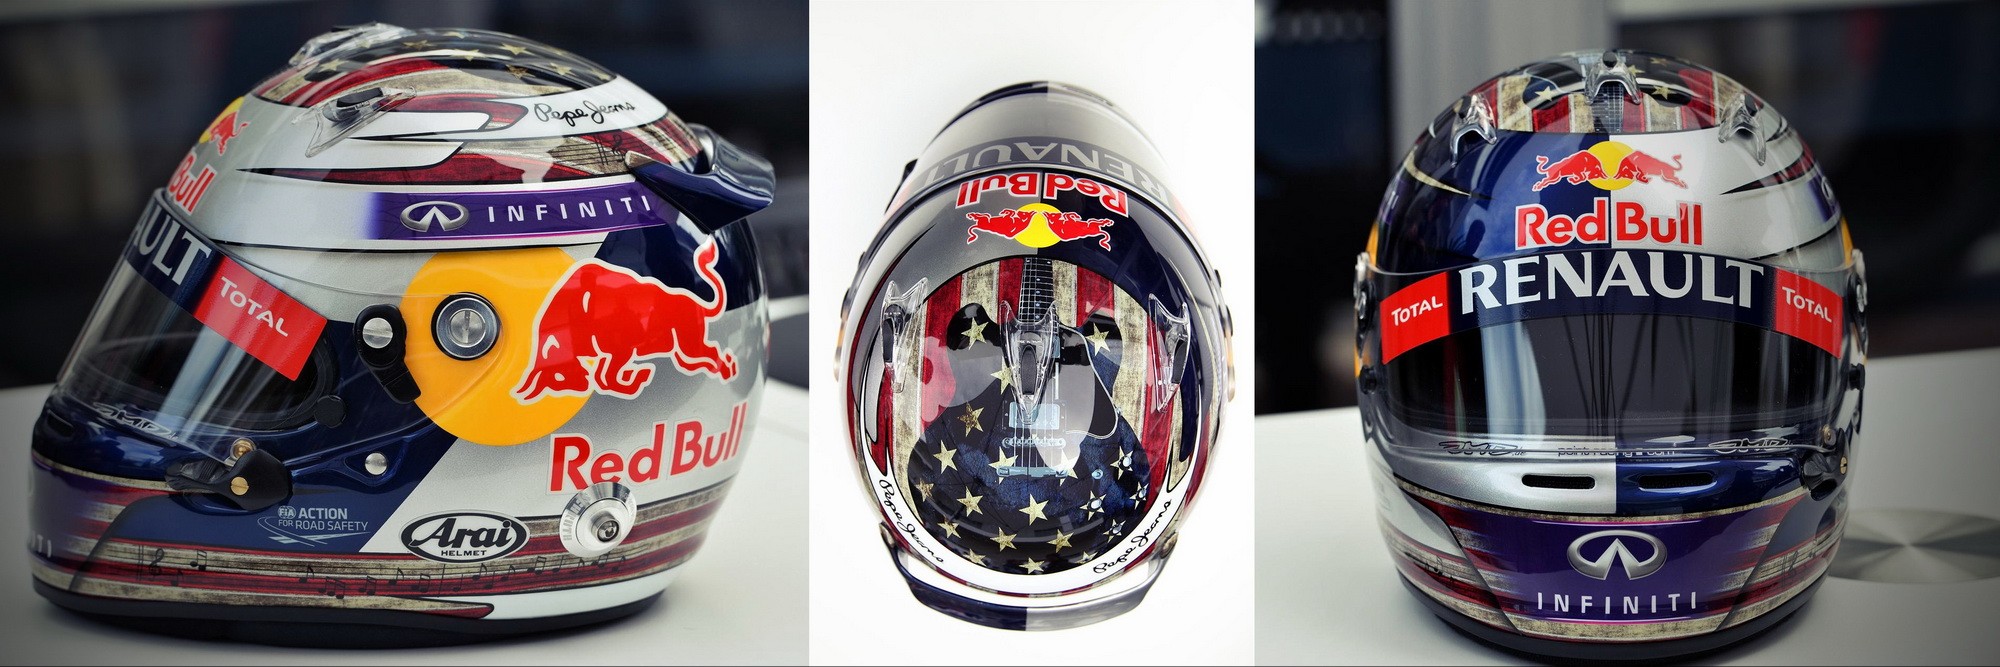 Шлем Себастьяна Феттеля на Гран-При США 2013 | 2013 USA Grand Prix helmet of Sebastian Vettel